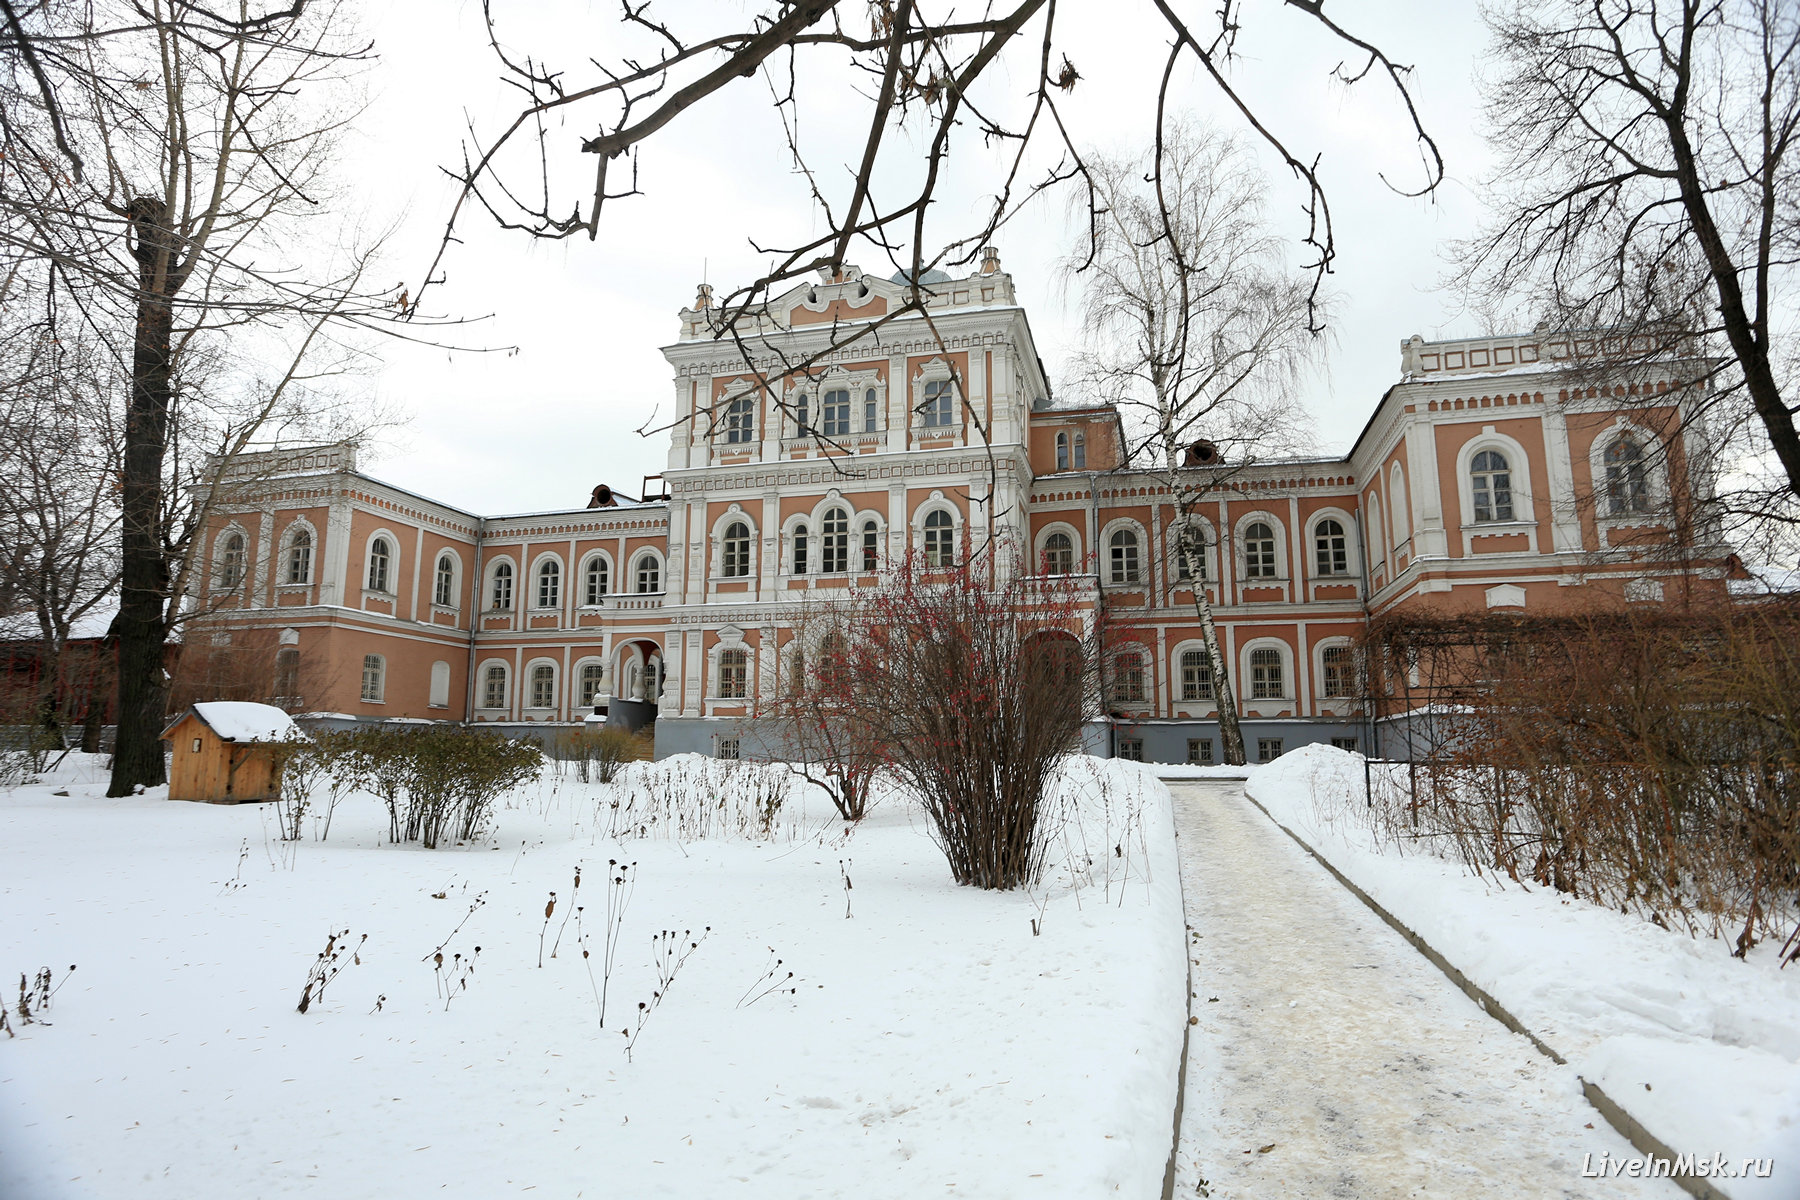 Елизаветинский дворец, фото 2015 года